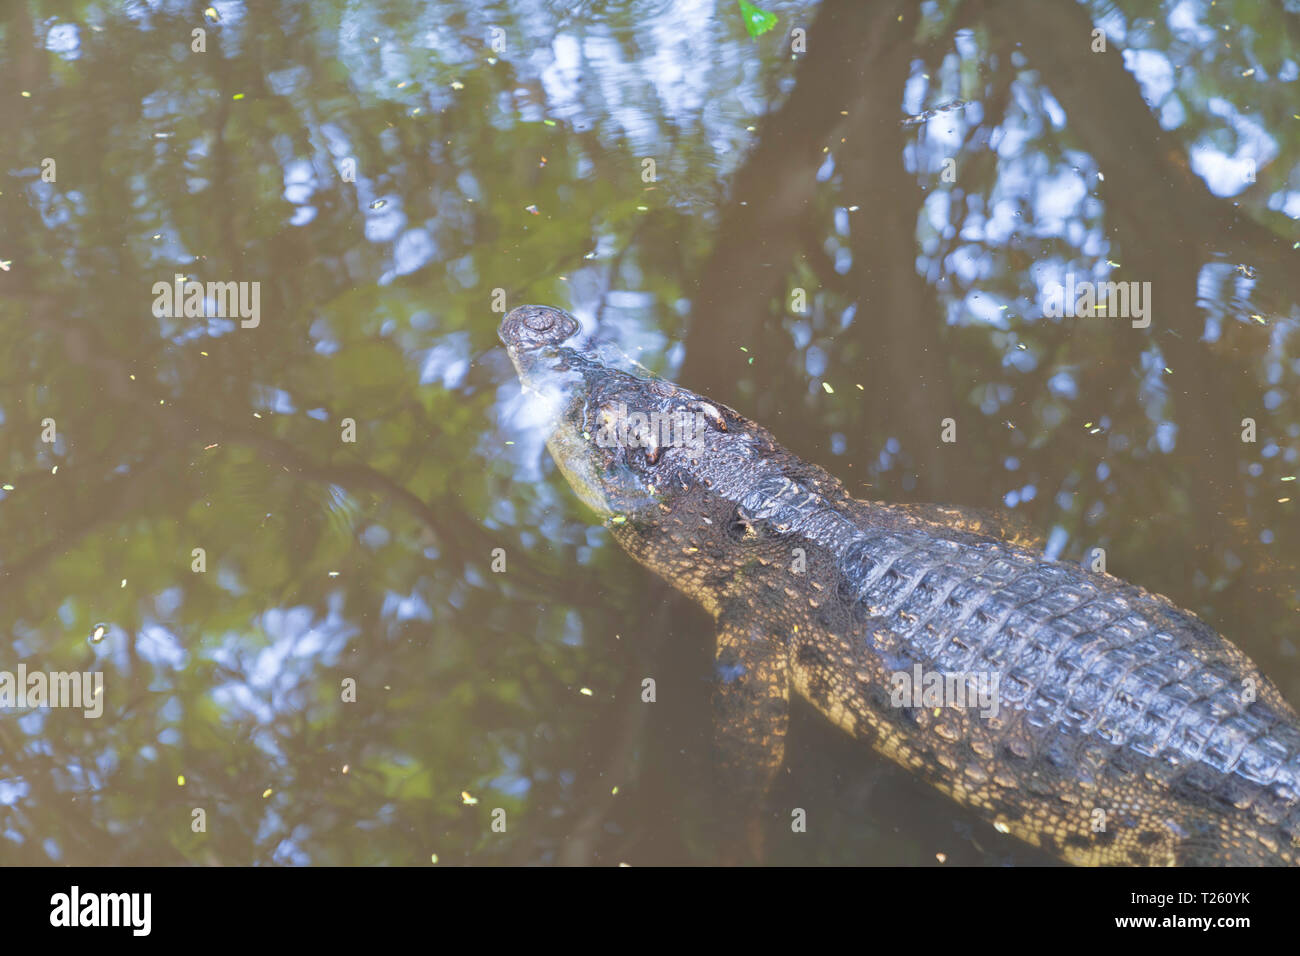 Asia big crocodile on river background, animal dangerous concept. Stock Photo